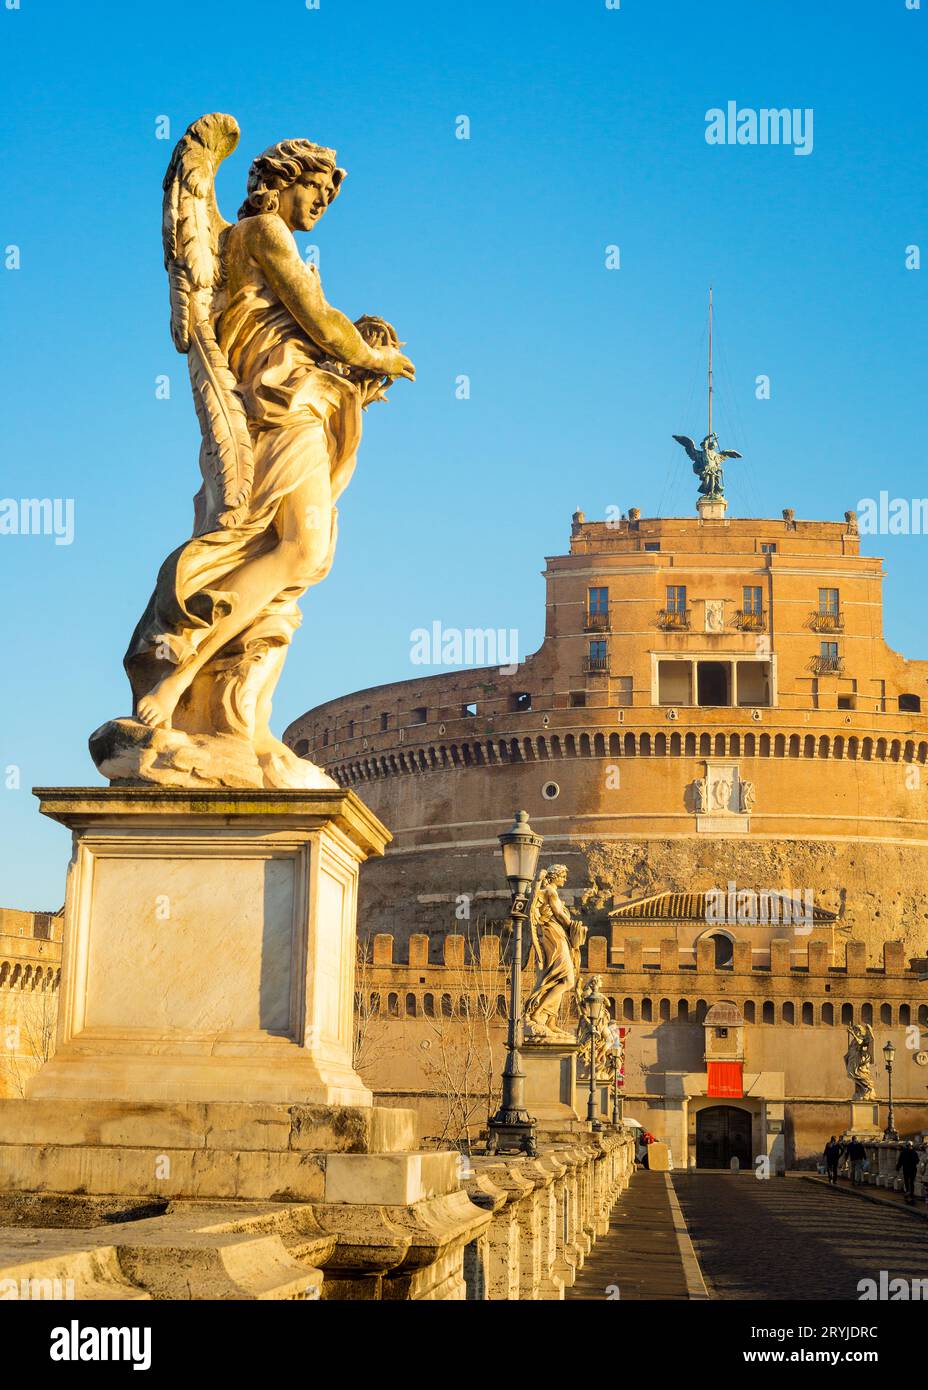 Sant Angelo Castle and Bridge in Rome, Italia. Stock Photo